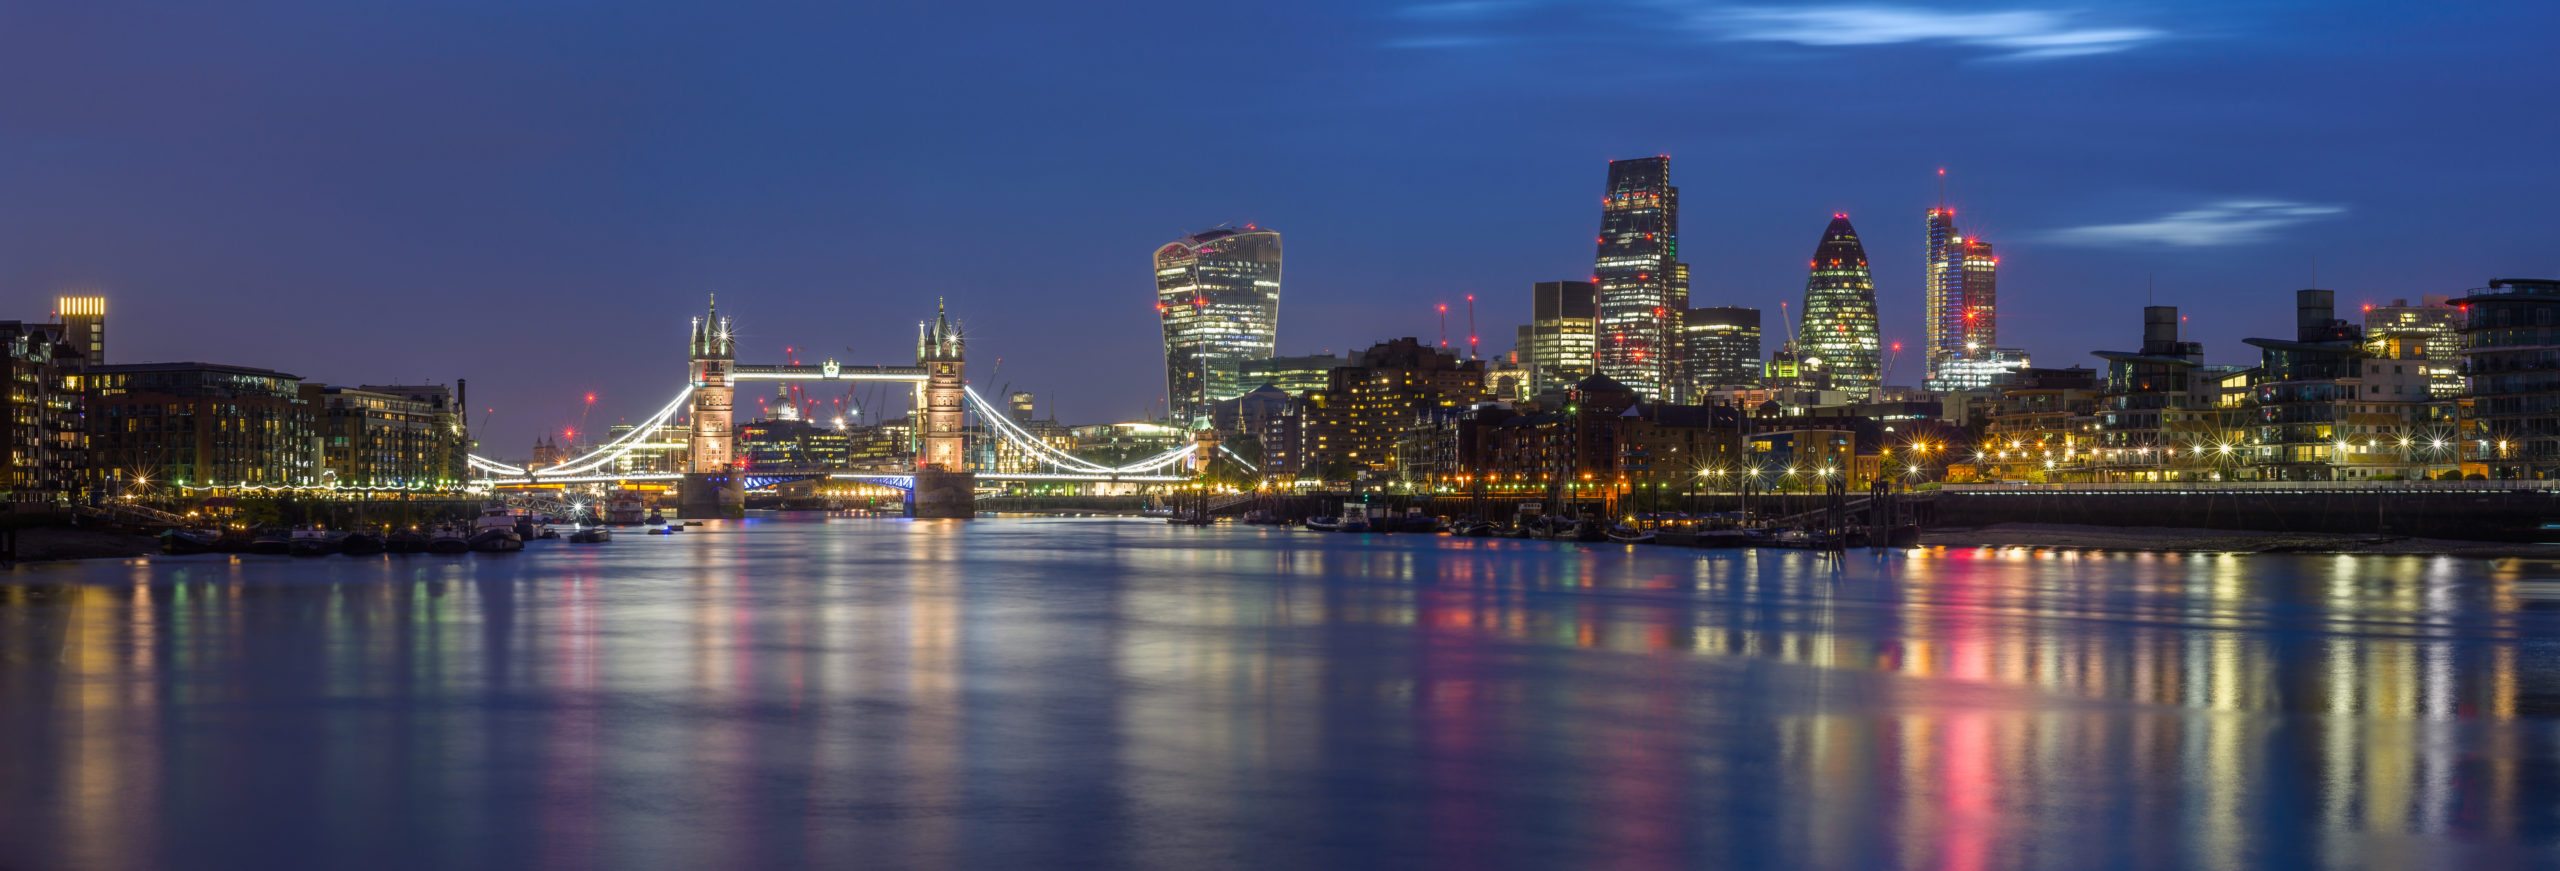 London Travel Week will be fully virtual in 2020 | WTM Global Hub